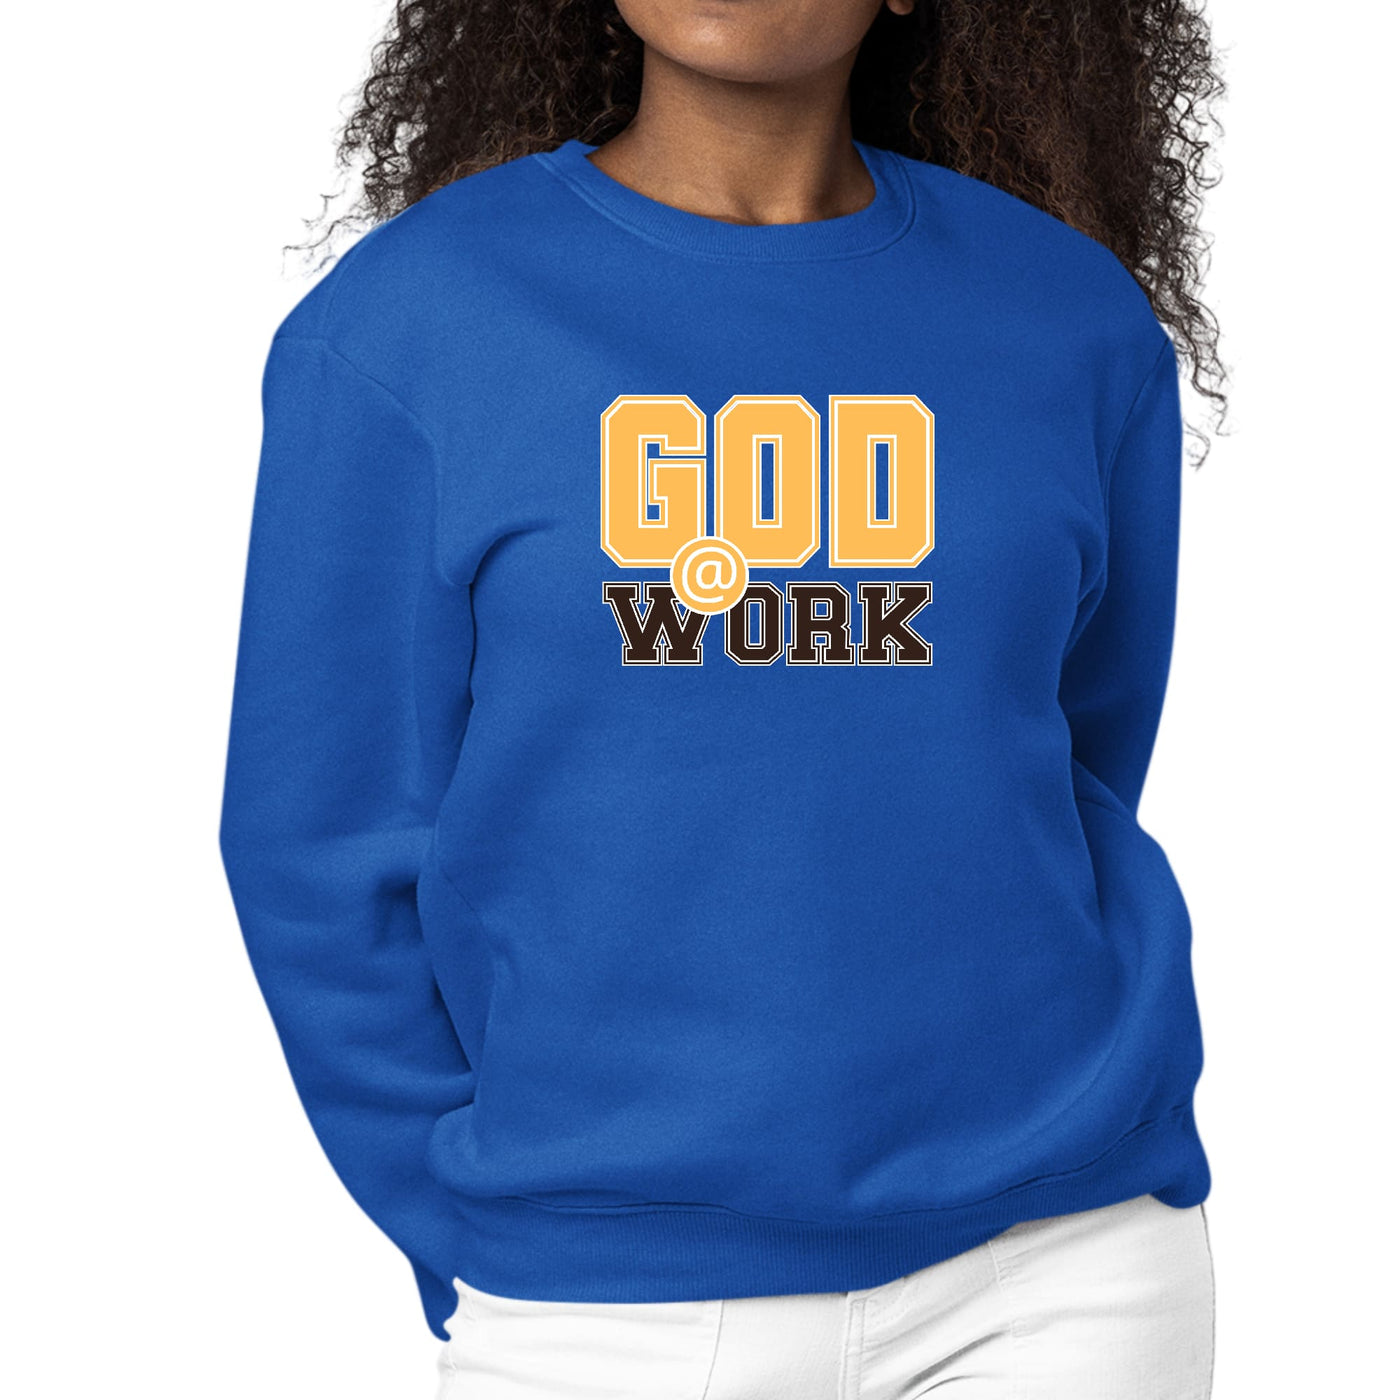 Womens Graphic Sweatshirt God @ Work Golden Yellow And Brown Print - Womens